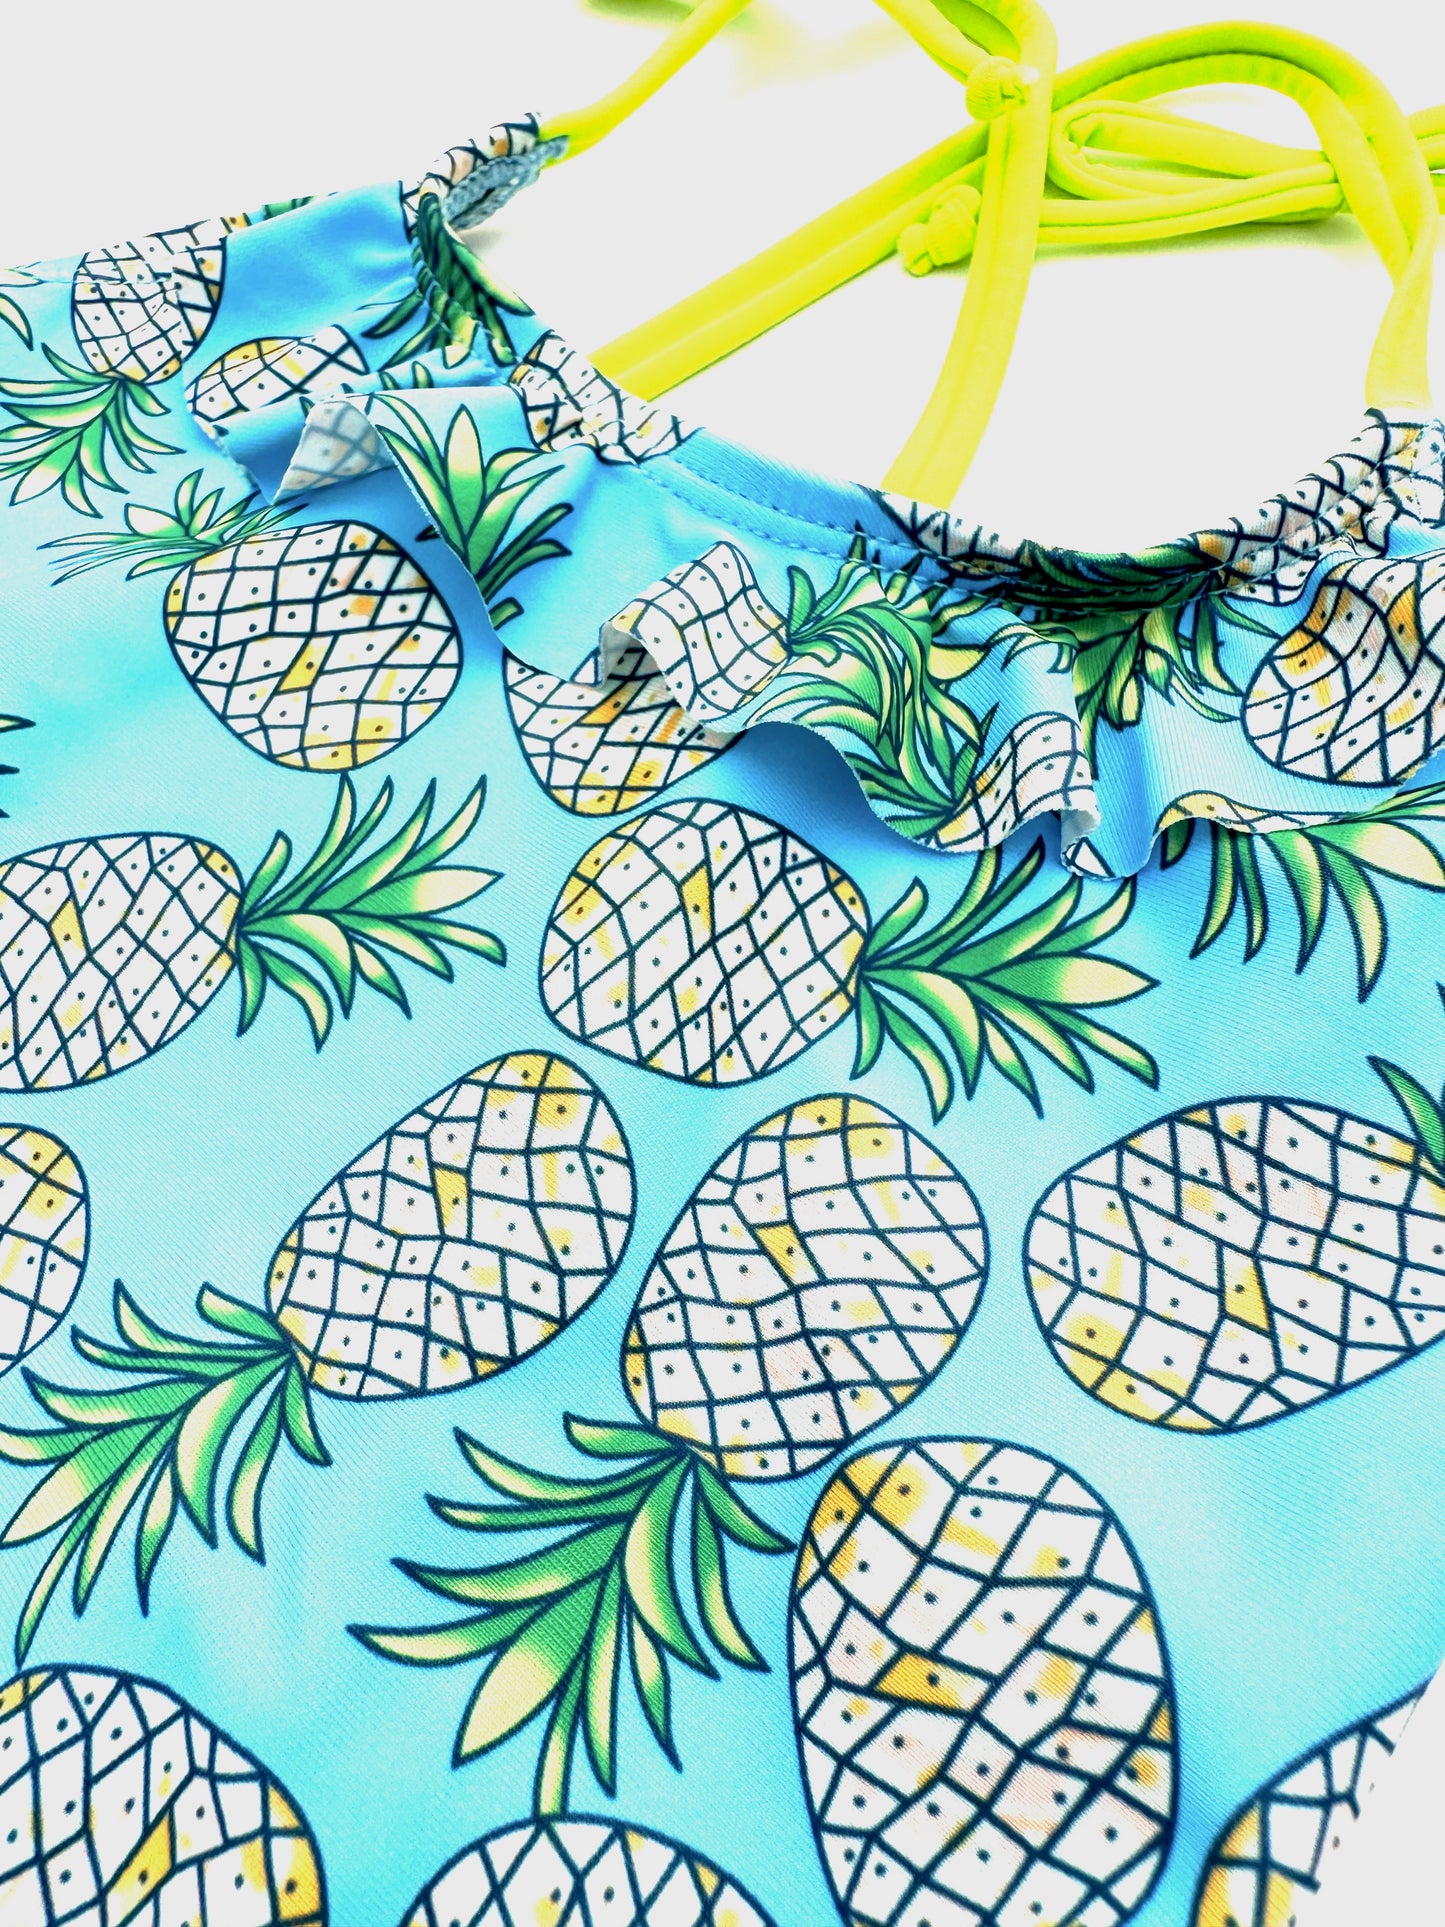 Pineapple Swimsuit